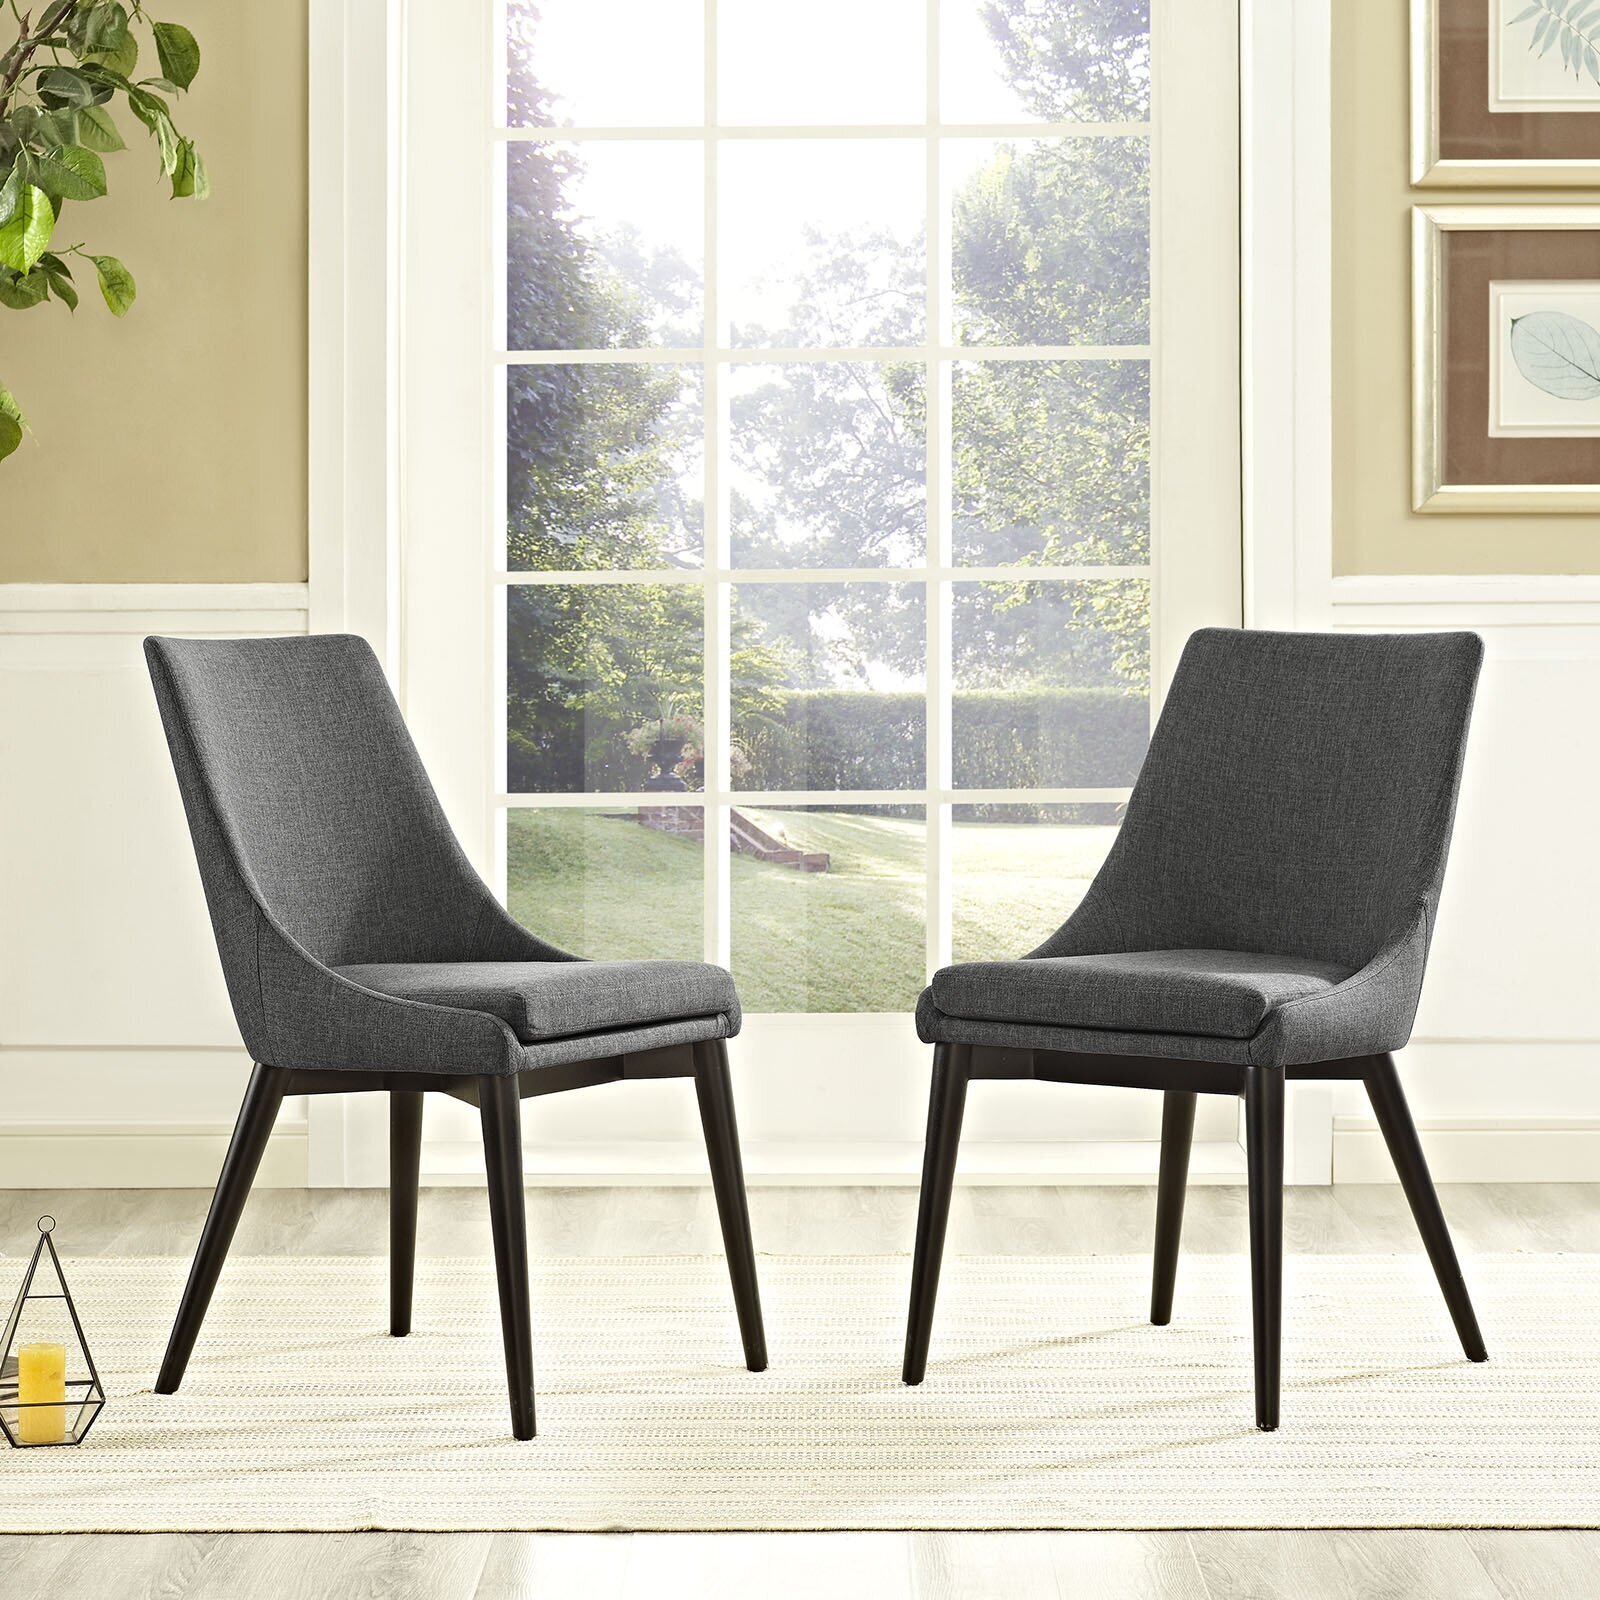 Sleek yet durable dining chair